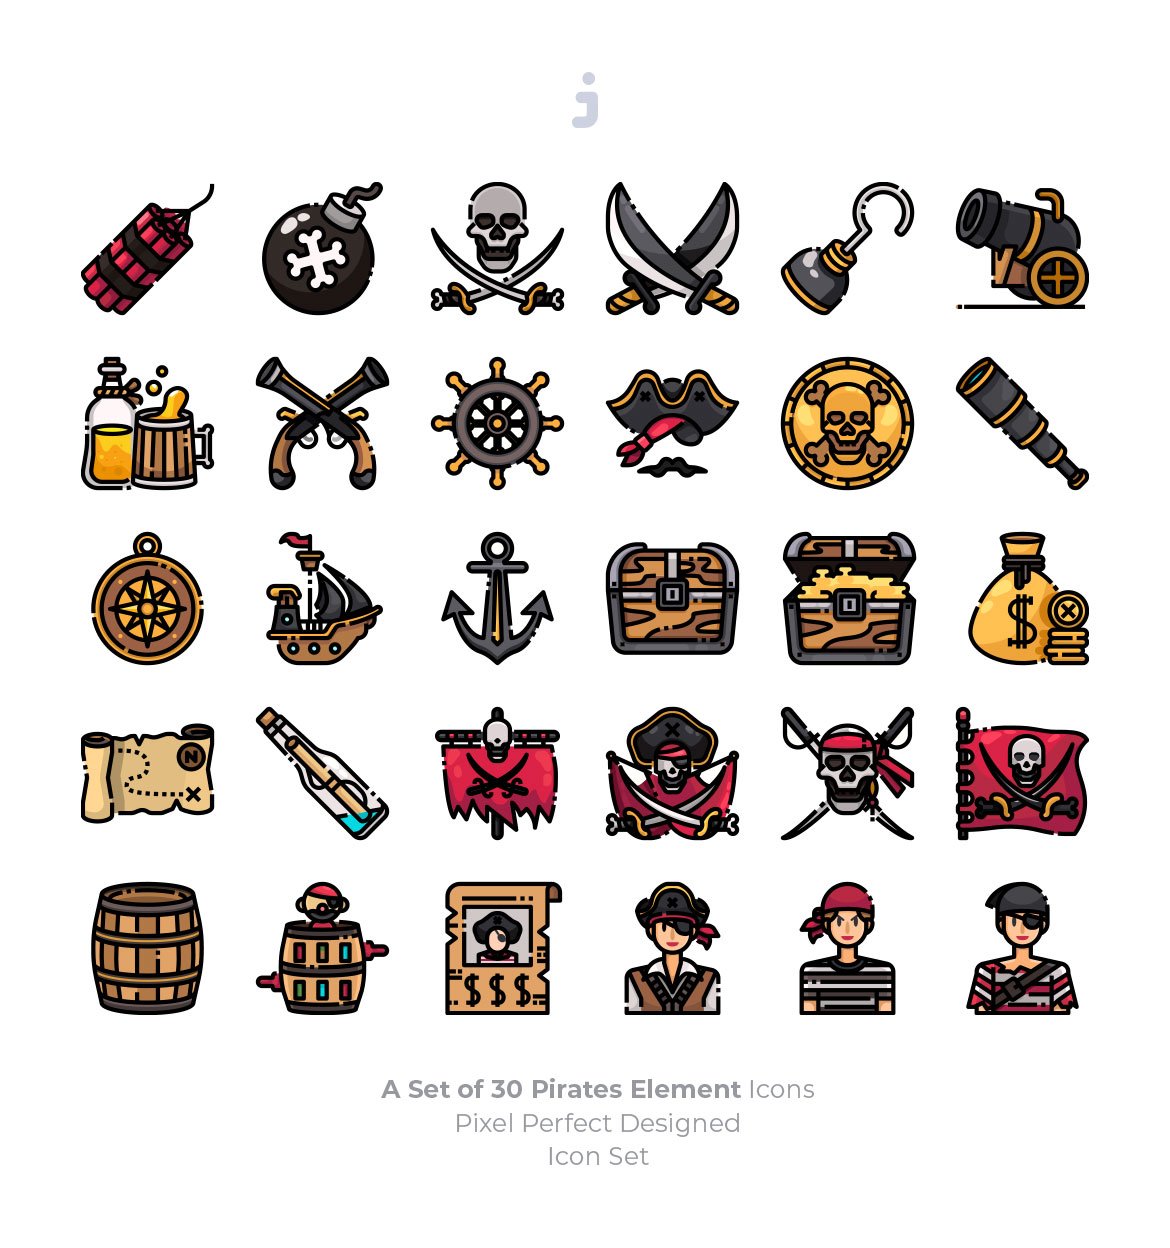 30 Pirates Element Icon set preview image.